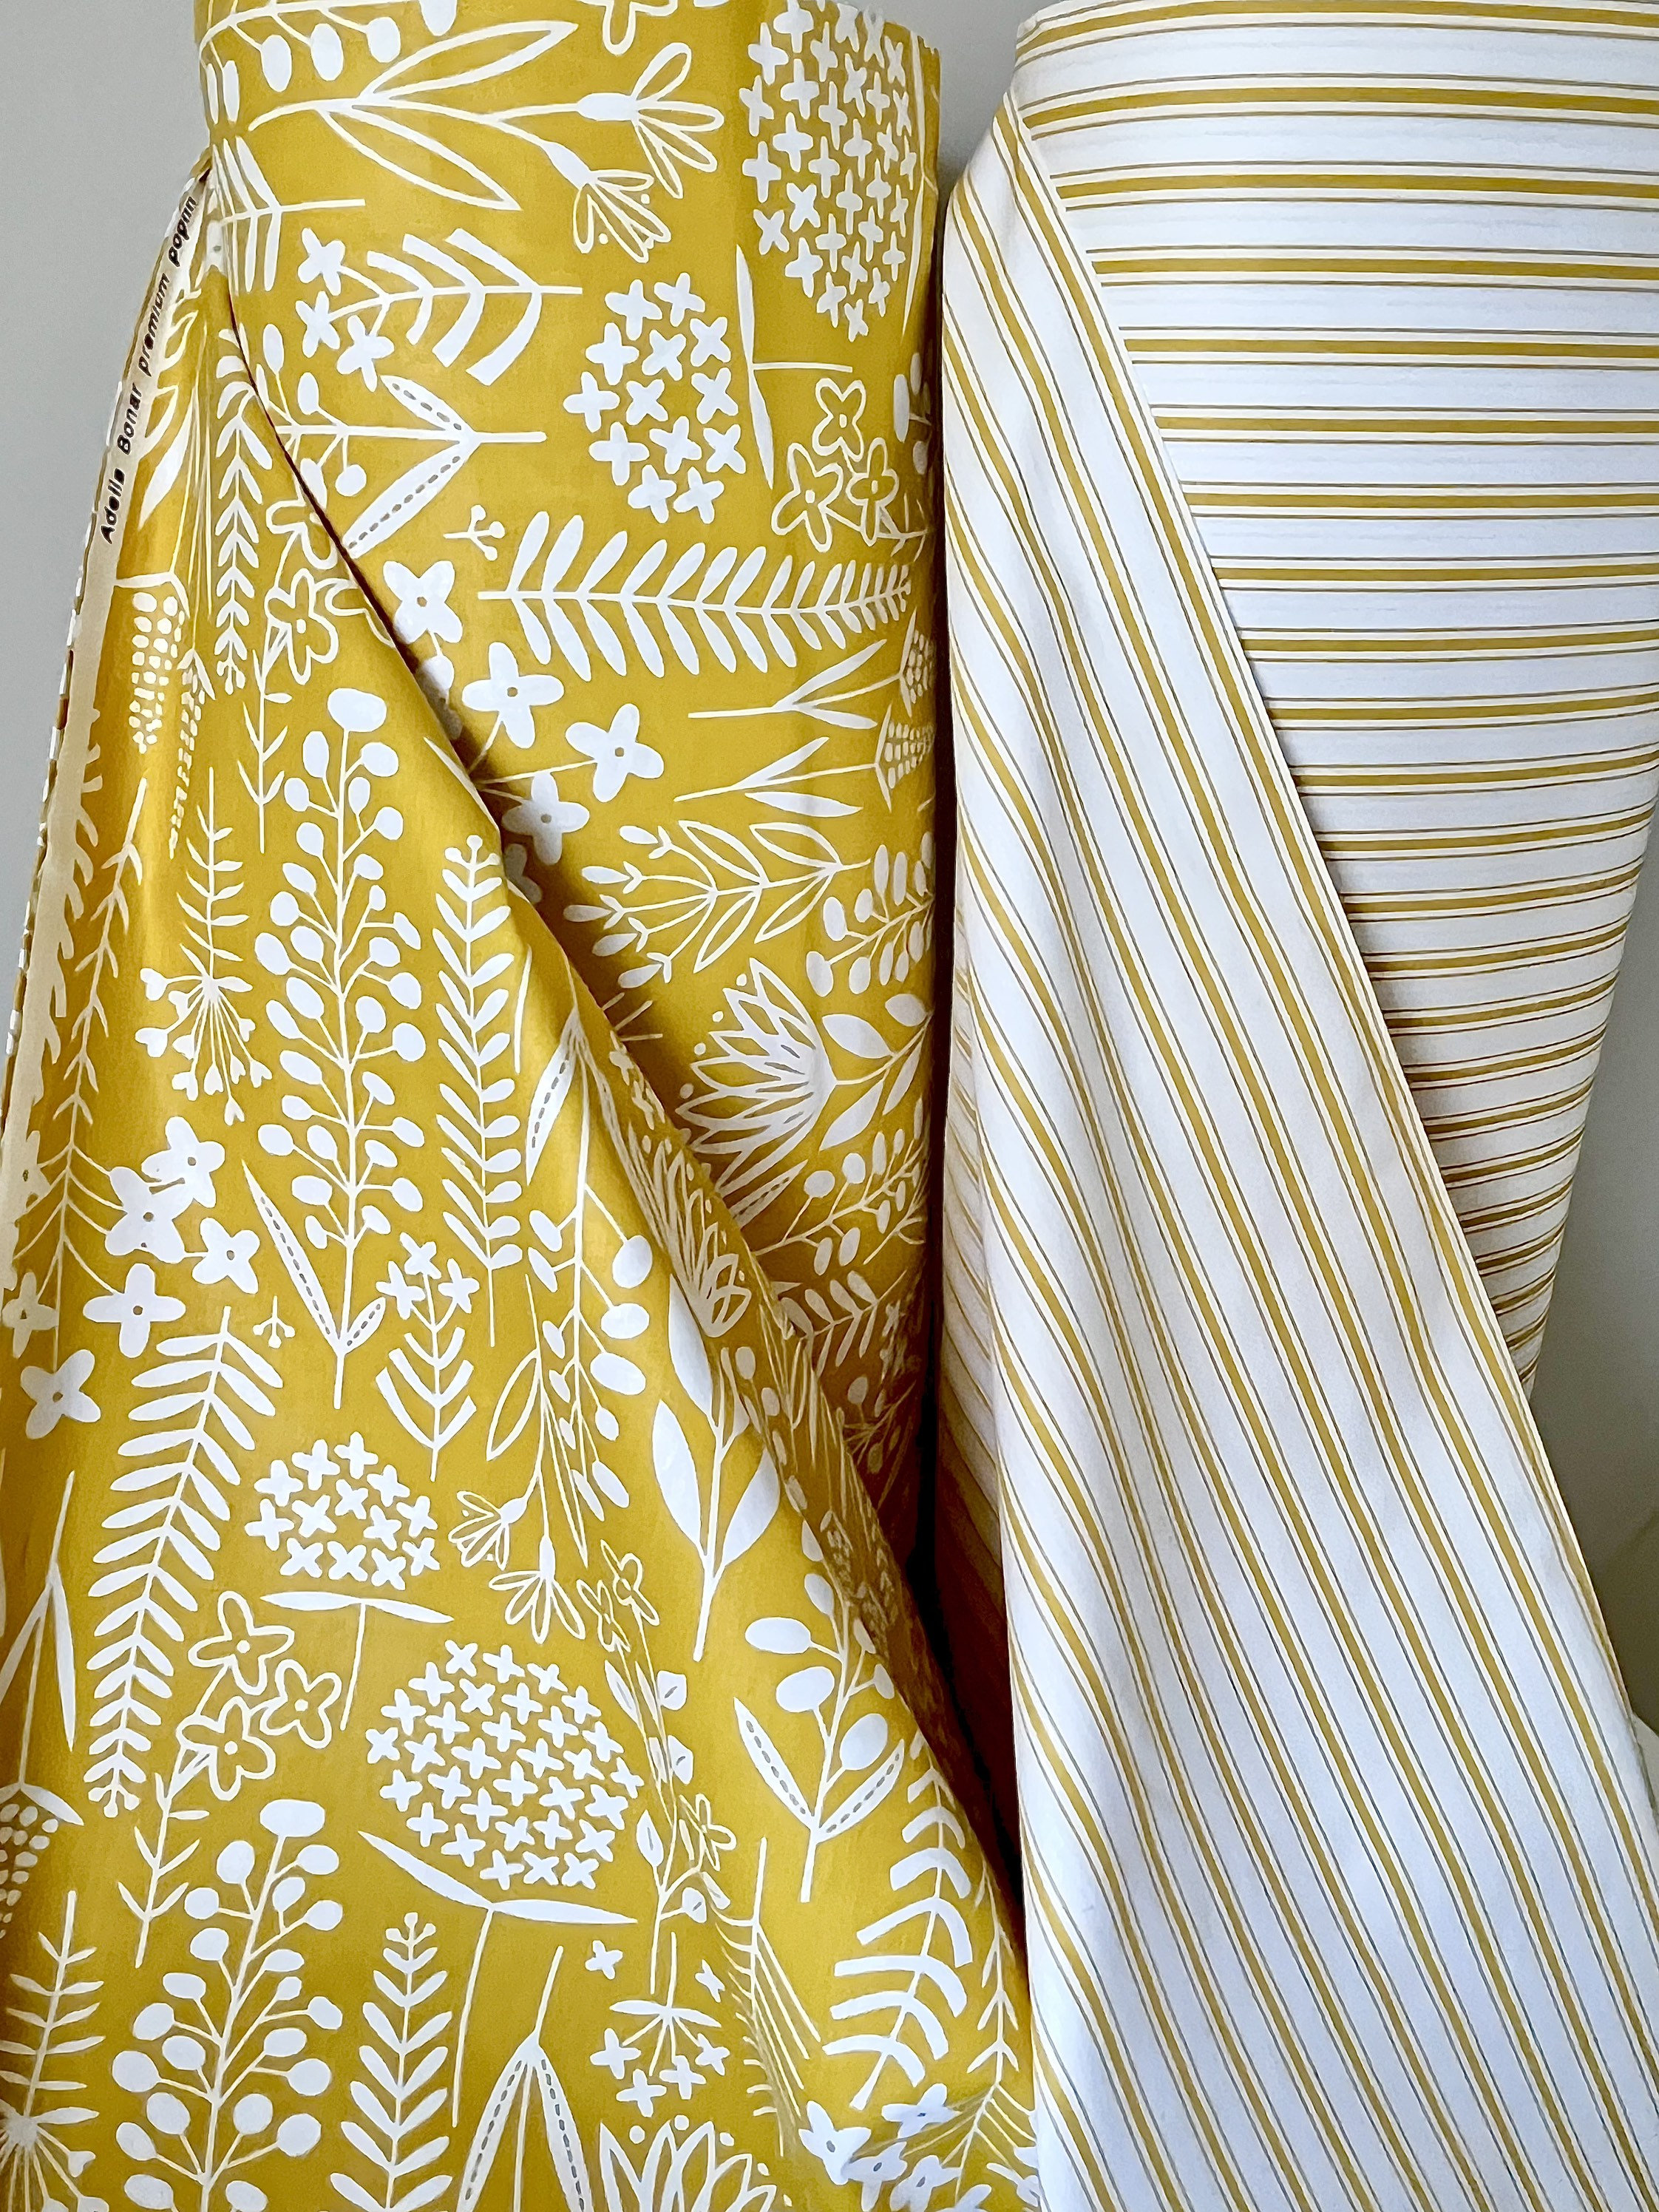  5 Yard Bright Yellow Cotton Fabric, Natural Cotton